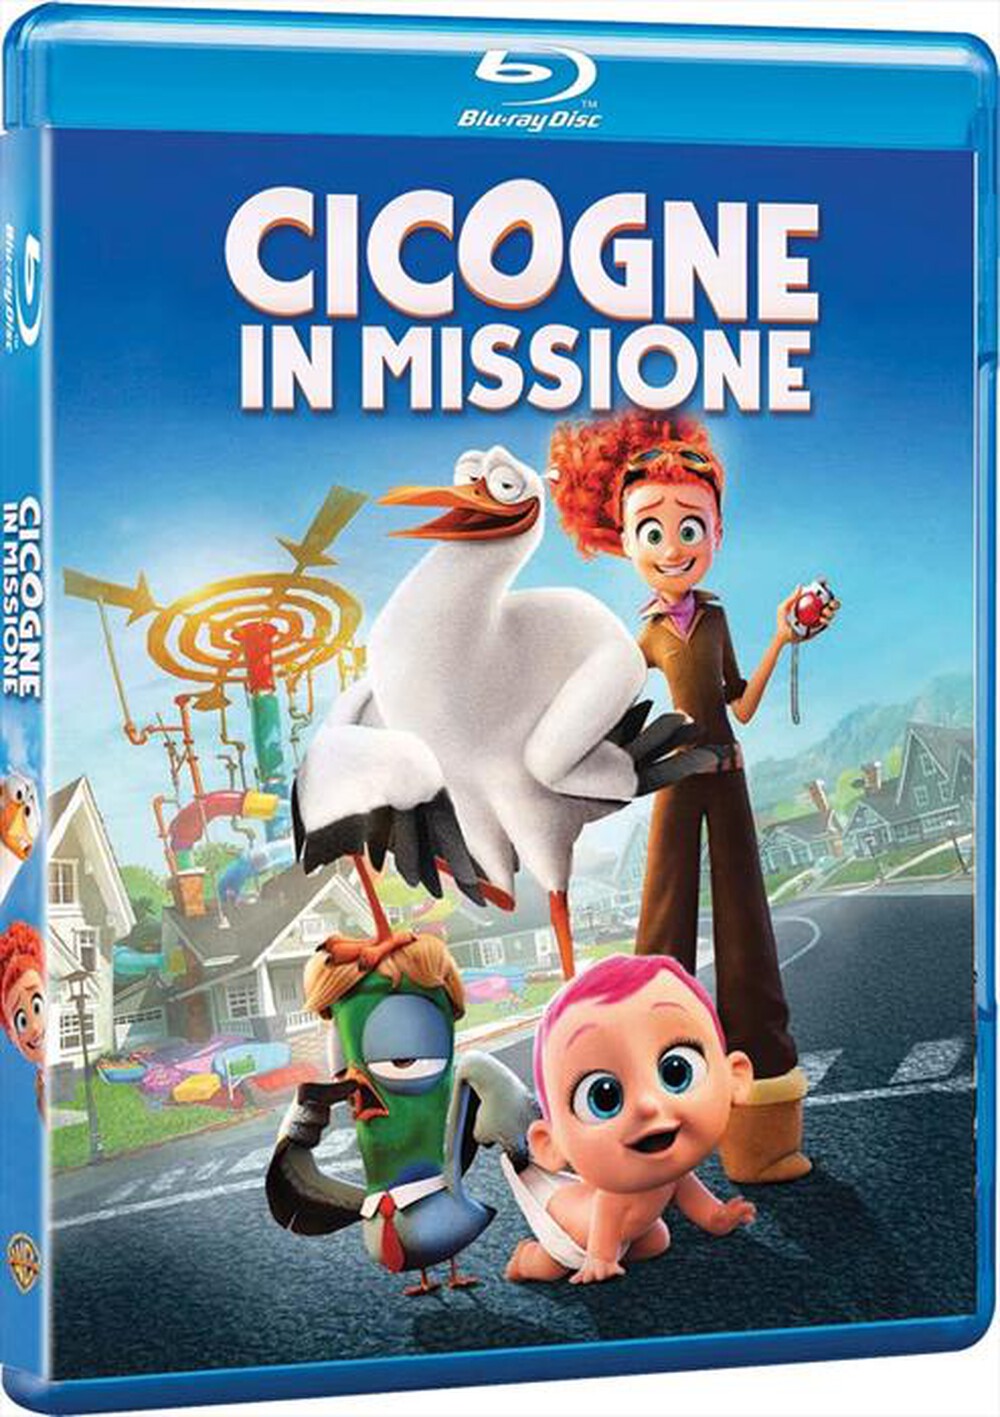 "WARNER HOME VIDEO - Cicogne In Missione"